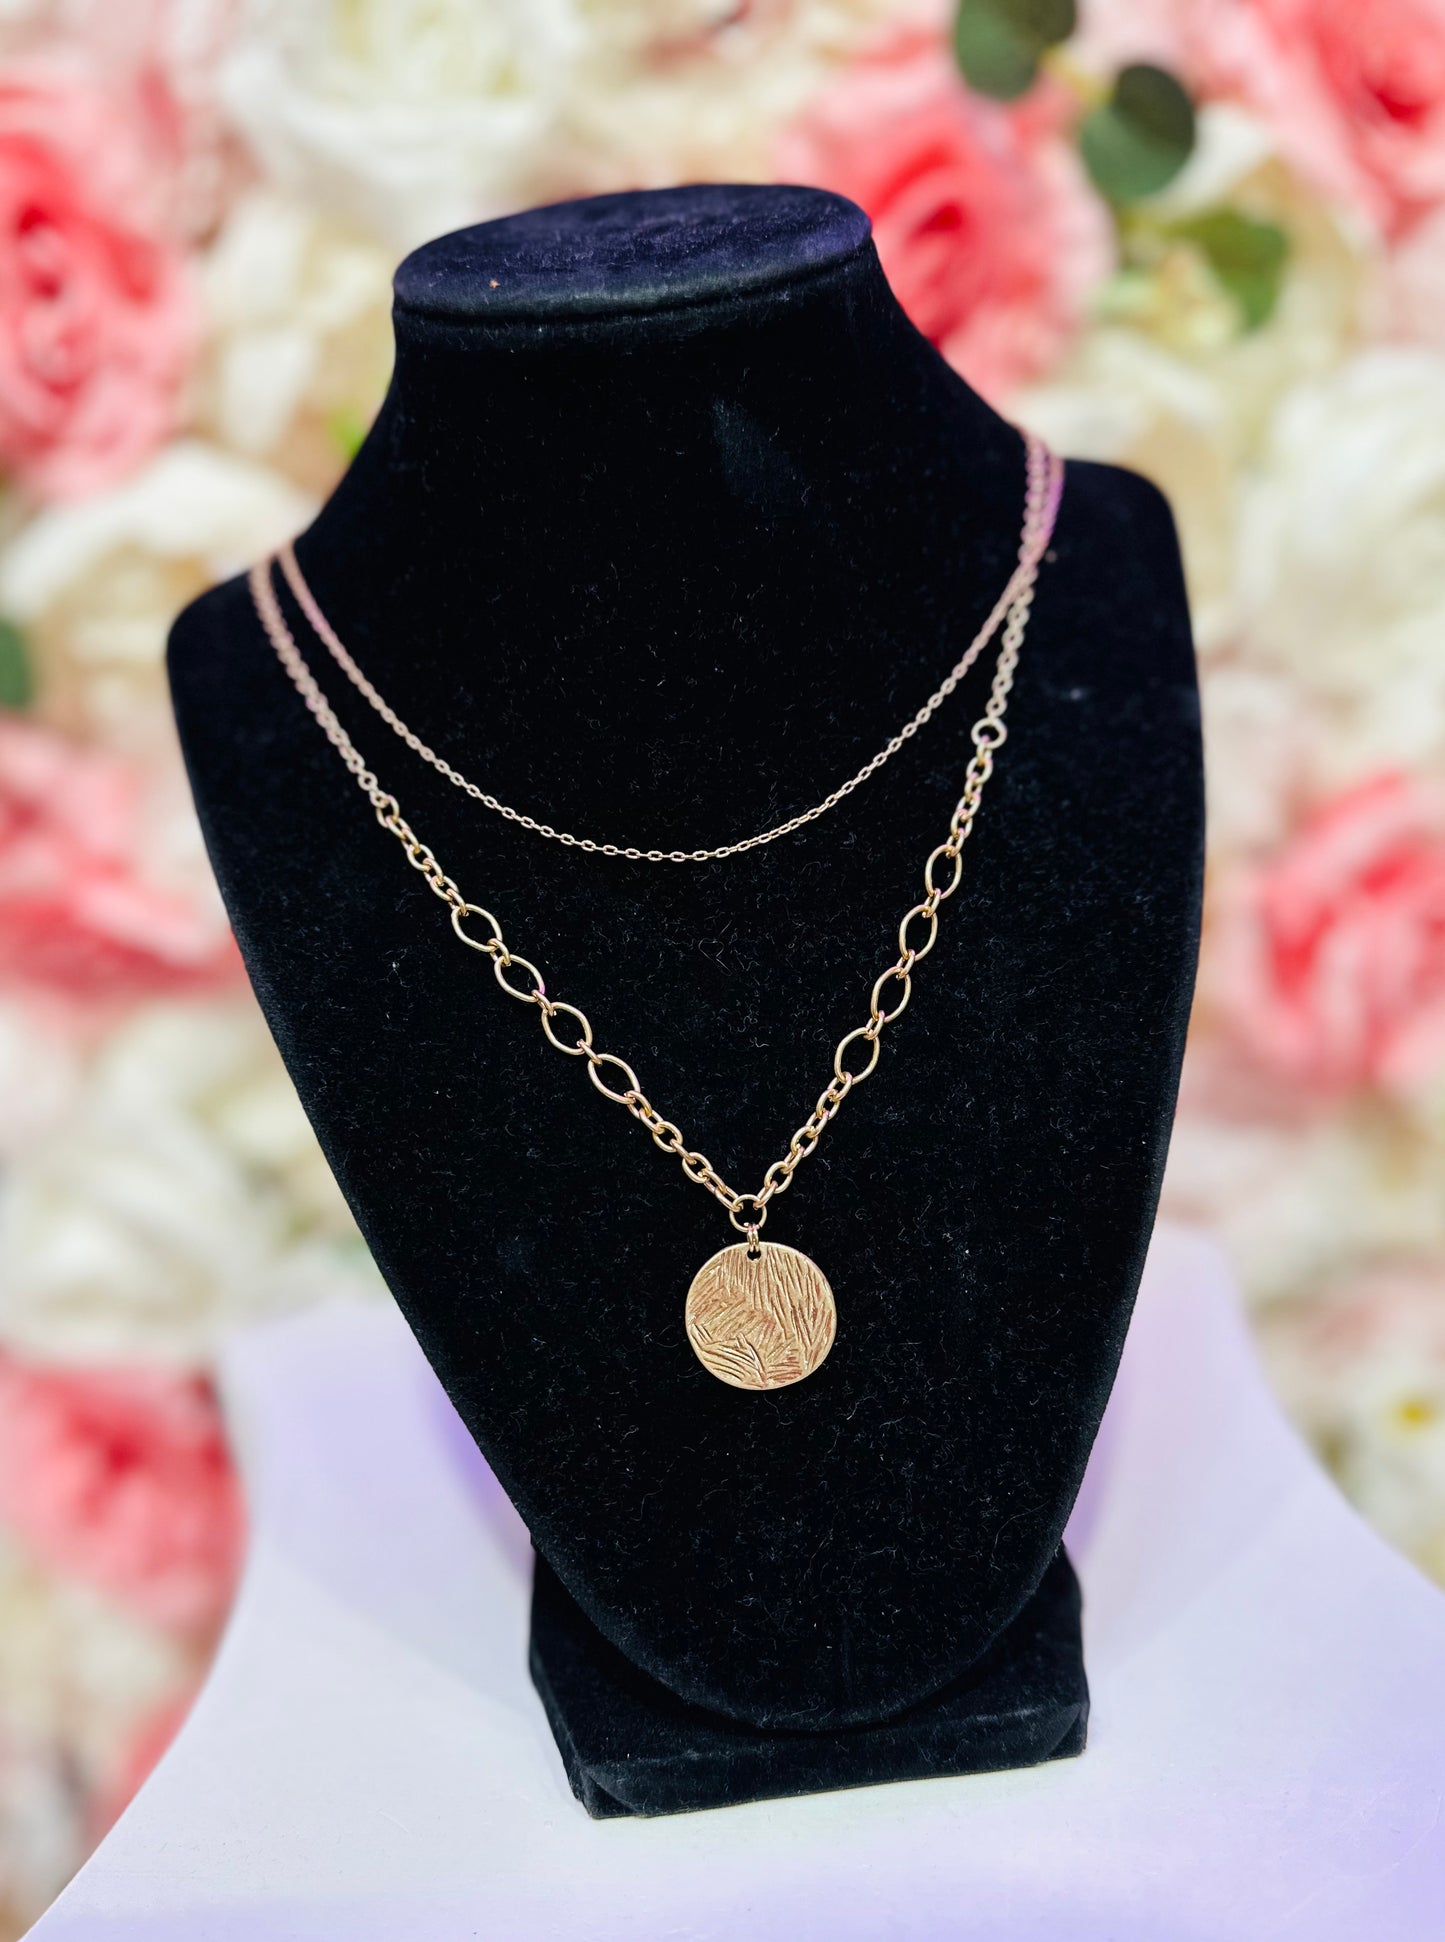 Gold Tone Chain Link Necklace w/ Diamond Stone Pendant & Wood Beads